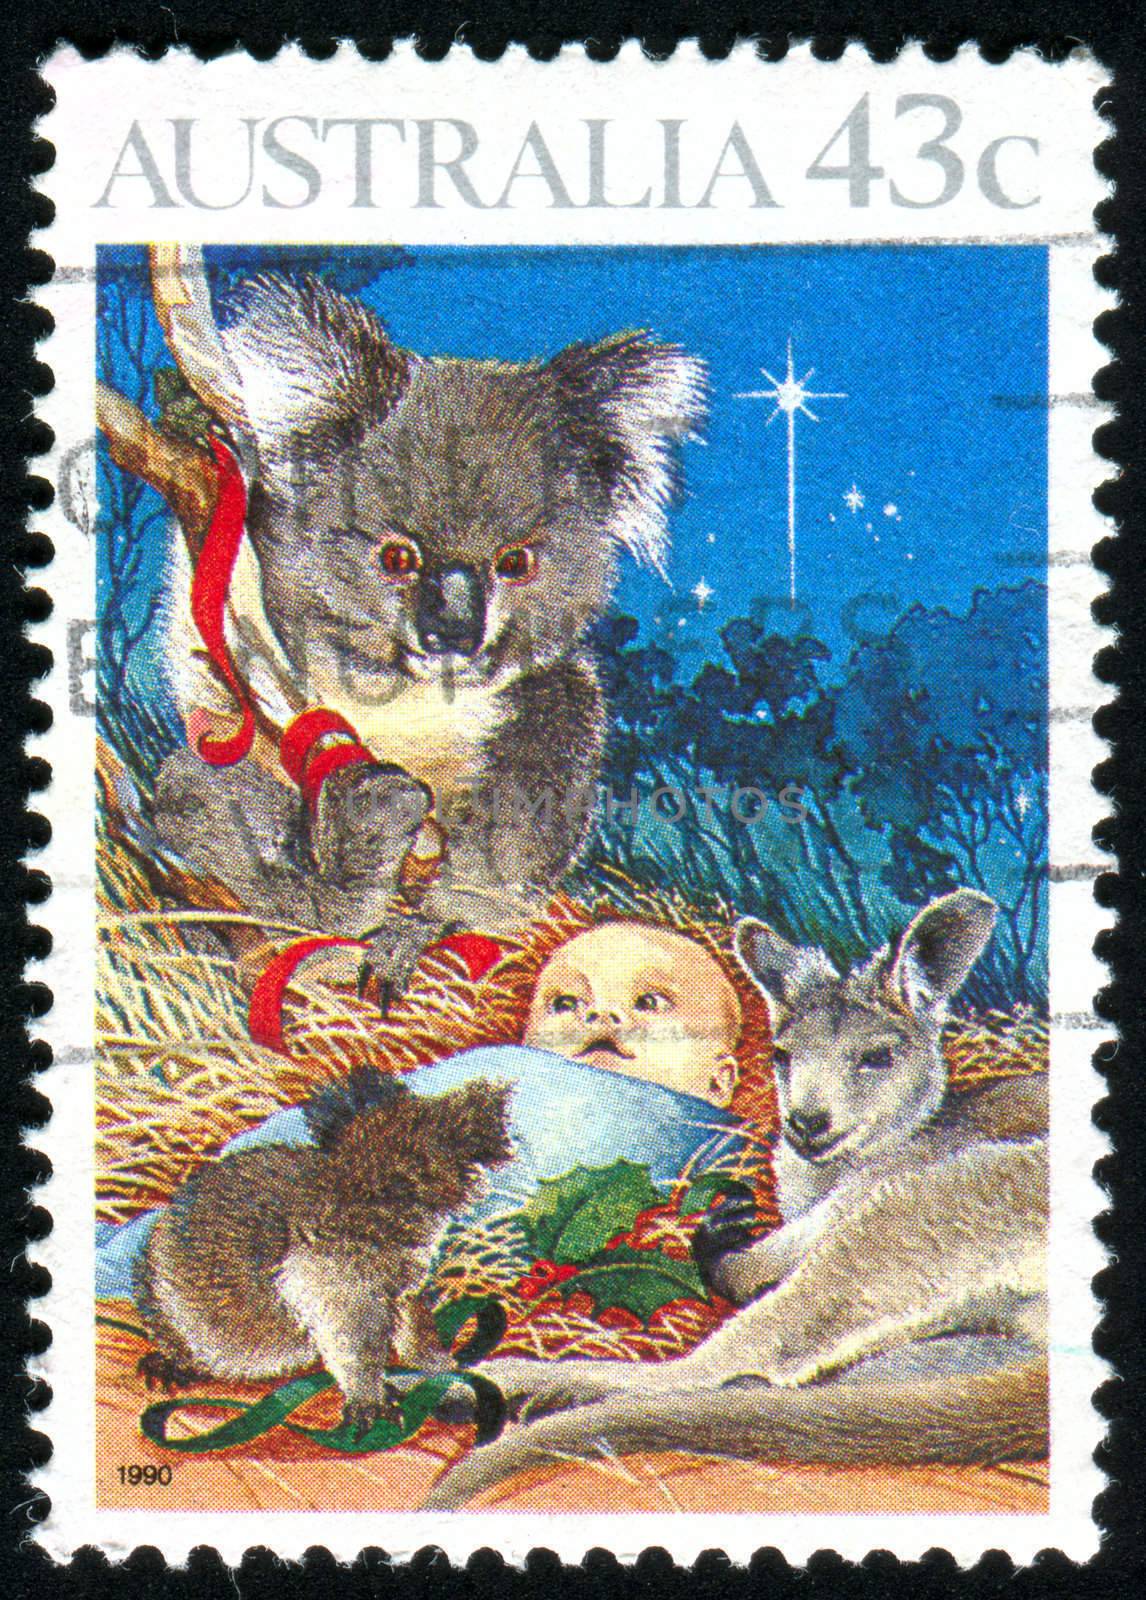 AUSTRALIA - CIRCA 1990: stamp printed by Australia, shows animals and baby, circa 1990